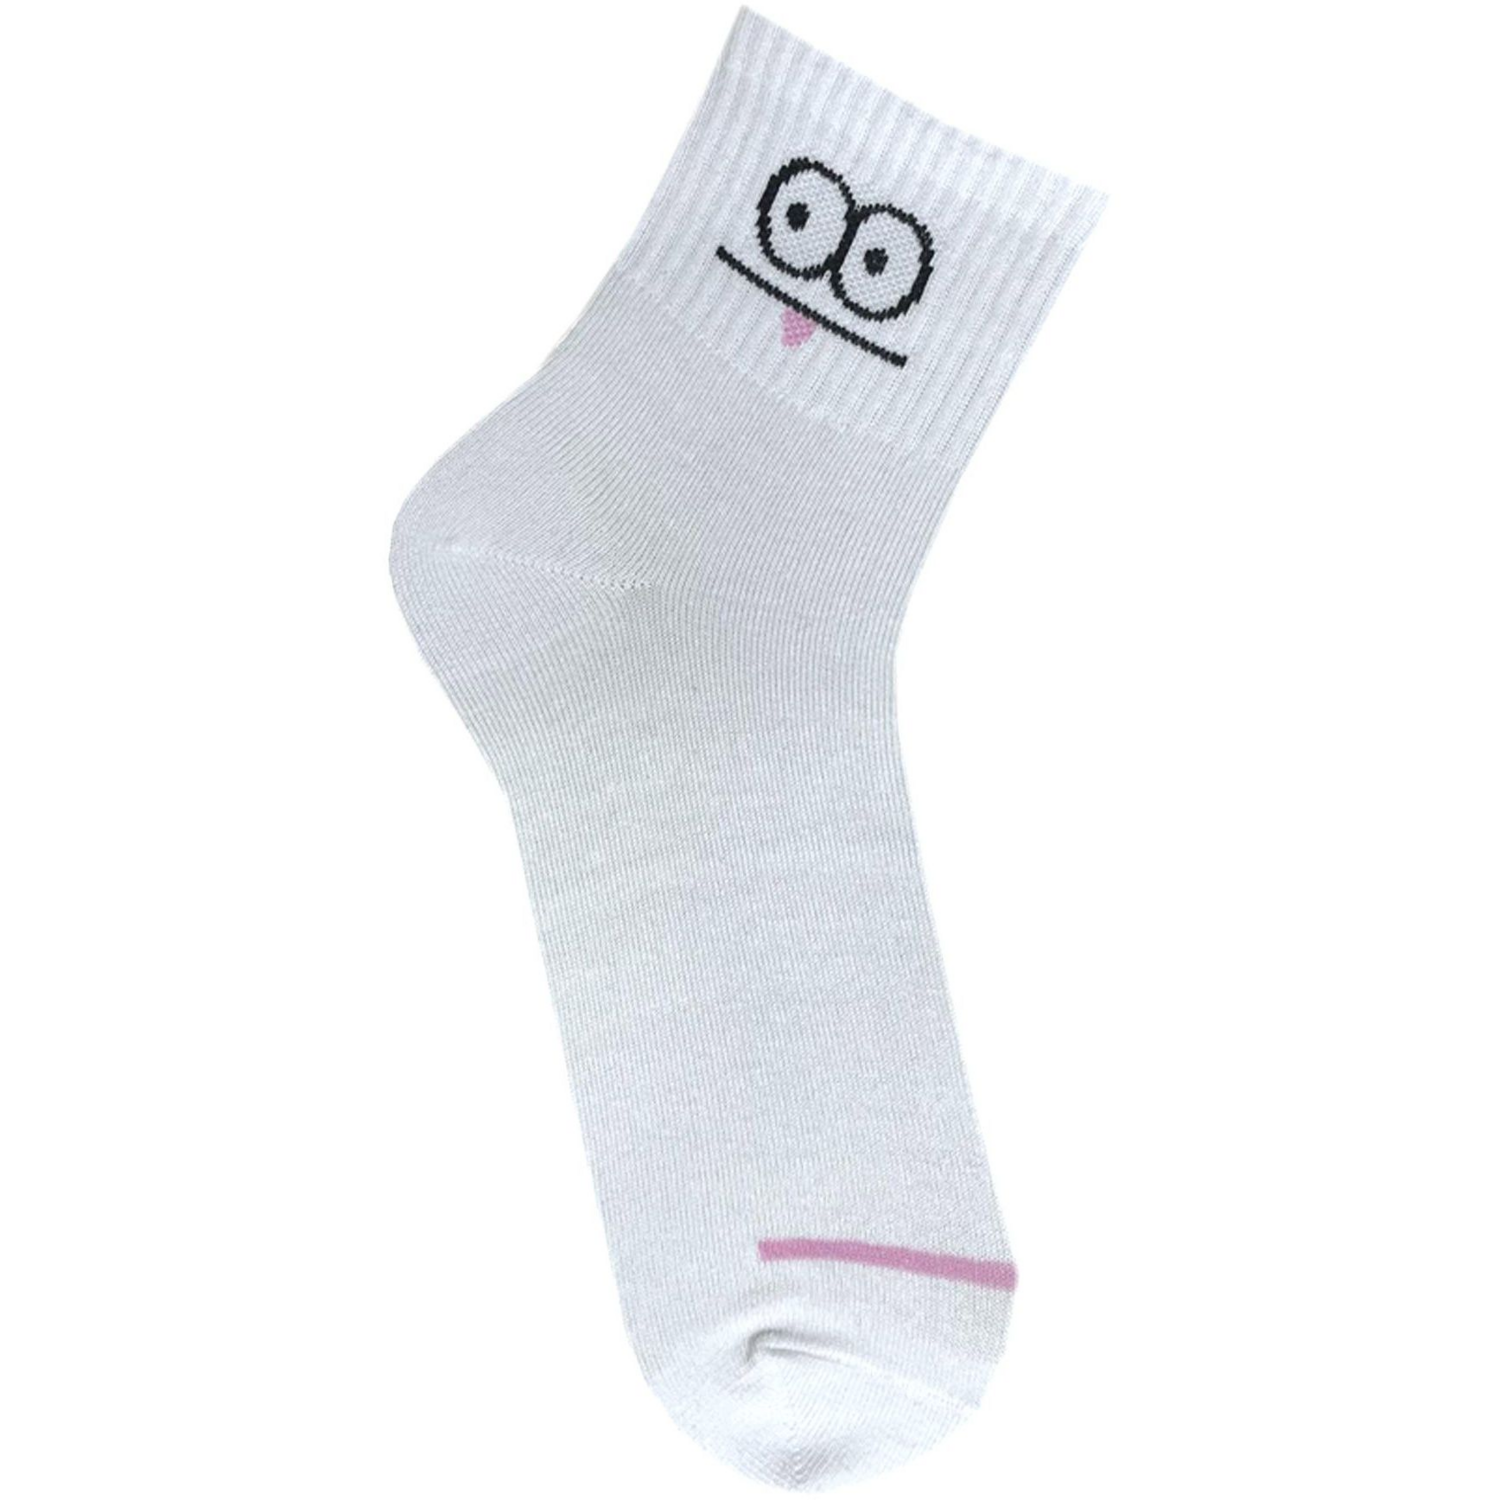 Носки женские Premier Socks 36-40 1 пара белые с принтом Смайл (4820163319056) фото 